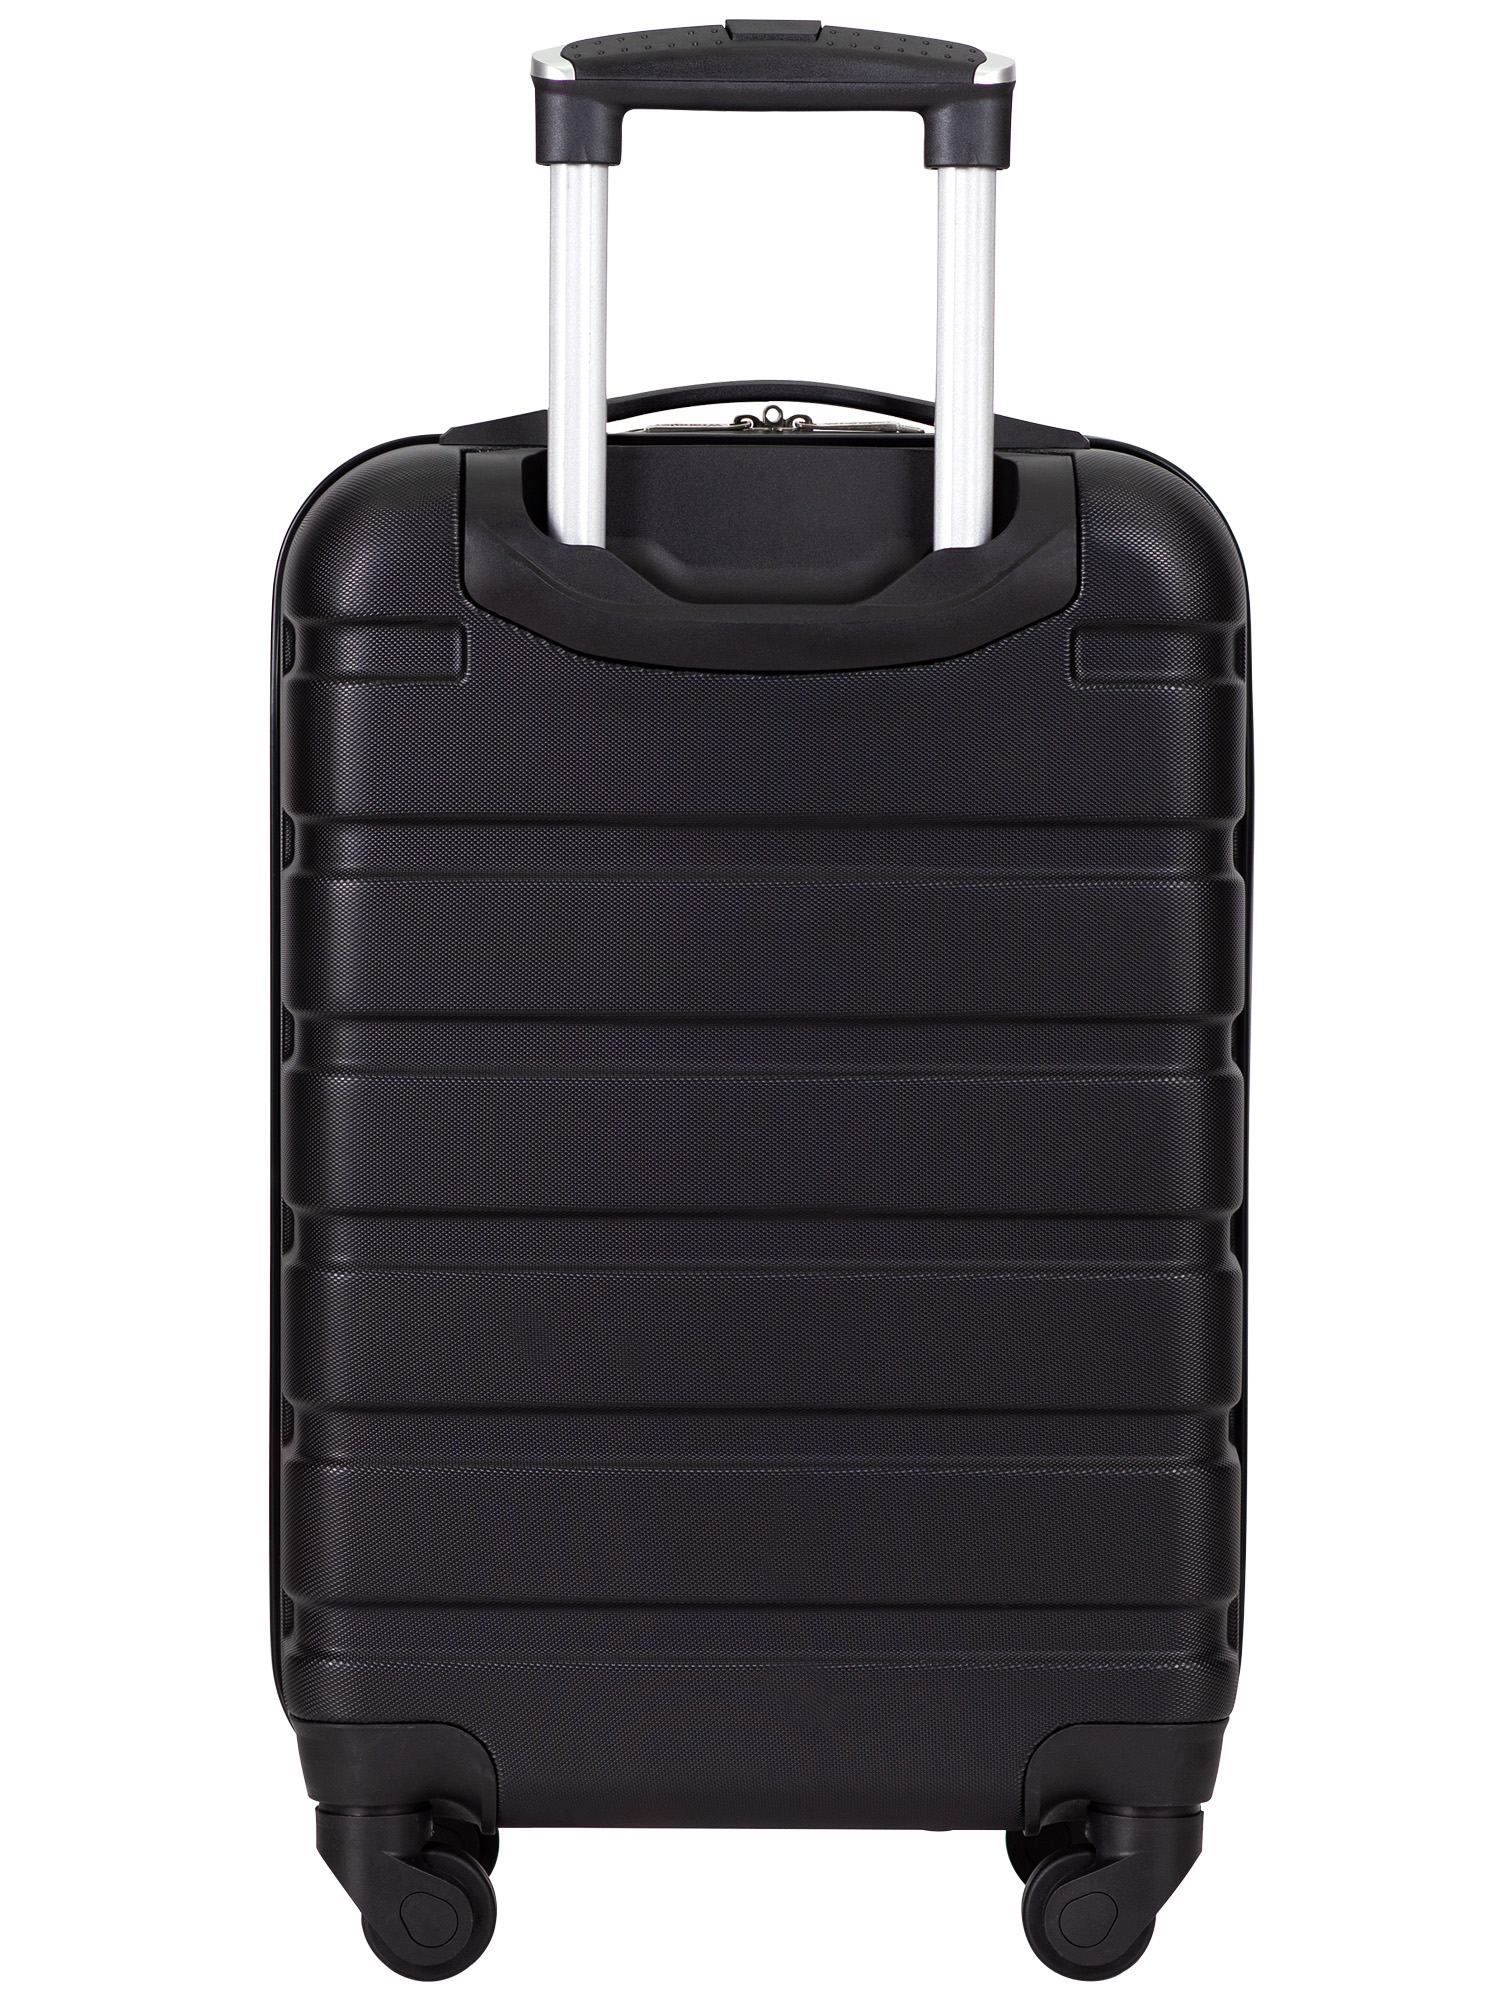 Wrangler 20” Carry-on Rolling Hardside Spinner Luggage Black - Walmart.com